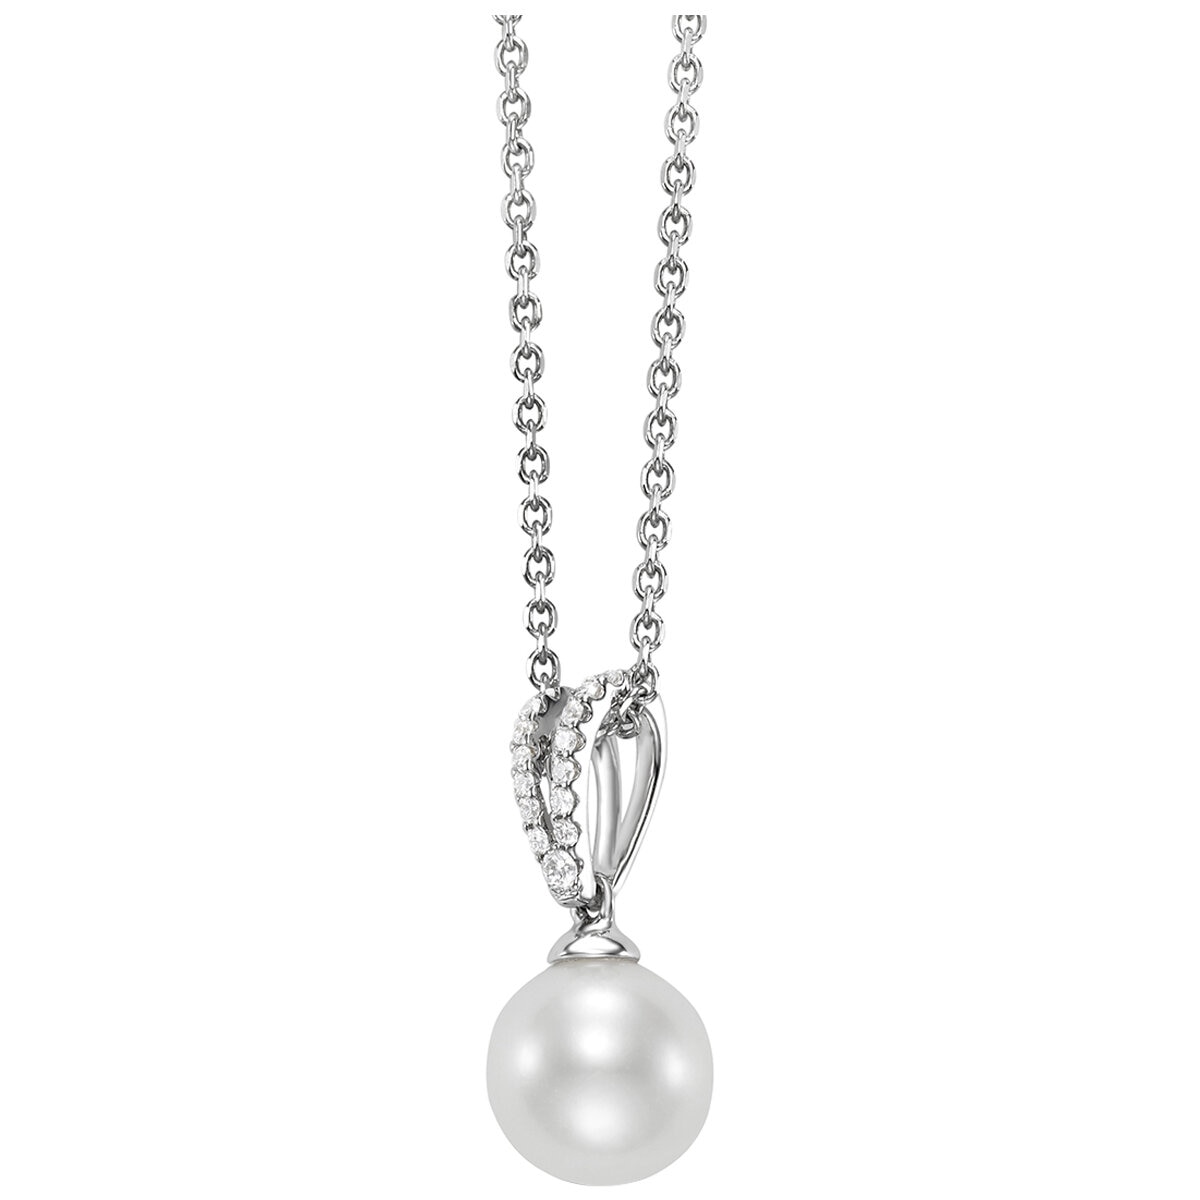 18KT White Gold 0.08ctw Diamond White Cultured Pearl Pendant